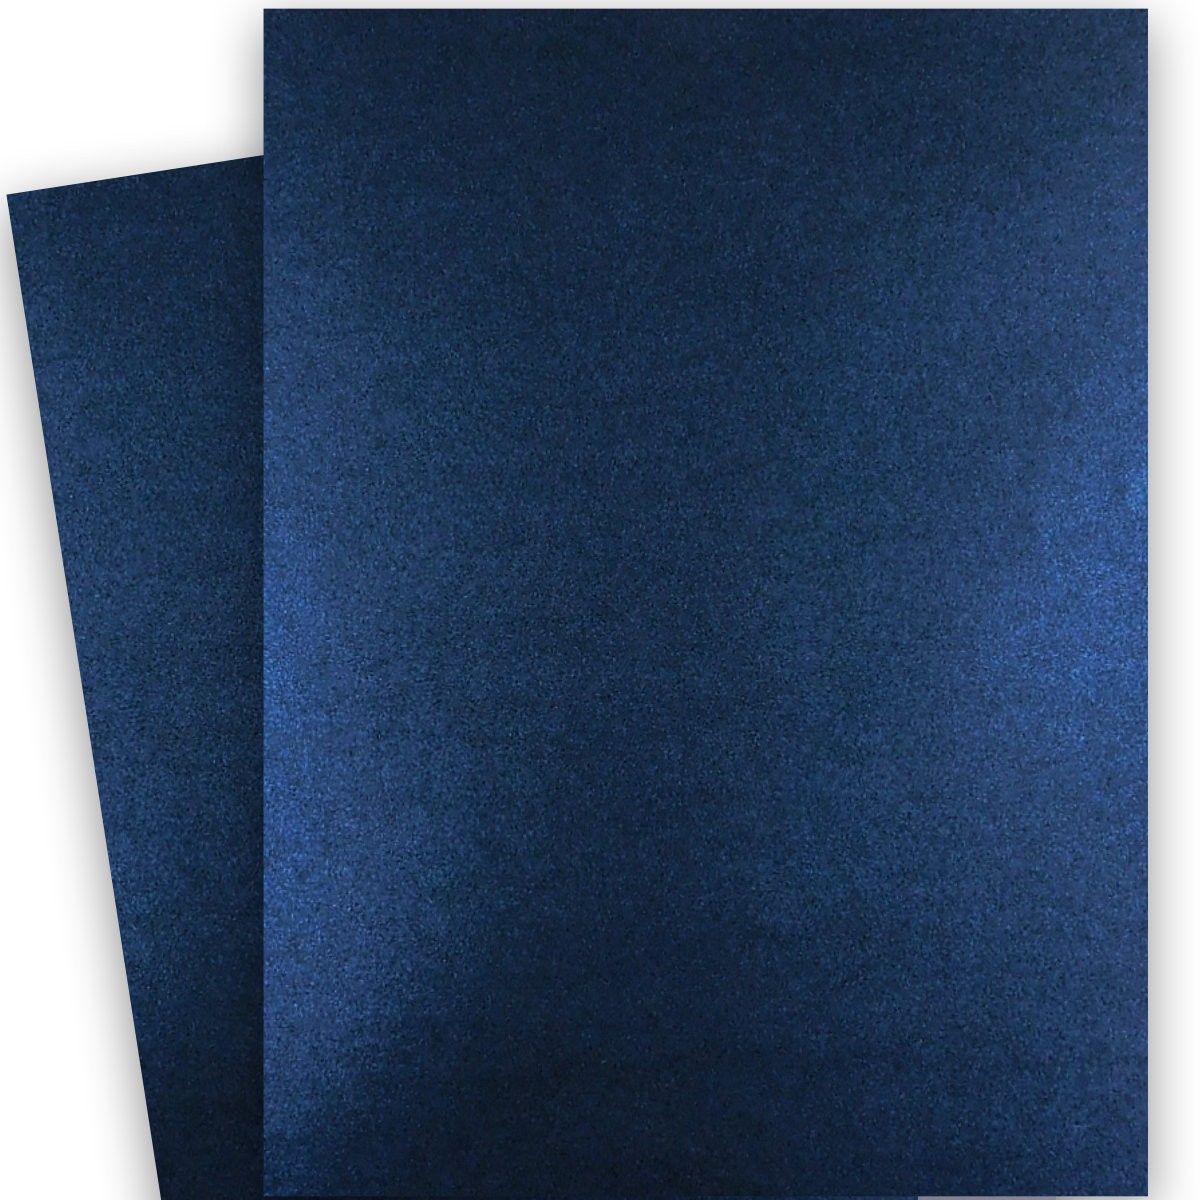 Shine BLUE SATIN - Shimmer Metallic Card Stock Paper - 8.5 x 11 - 92lb Cove